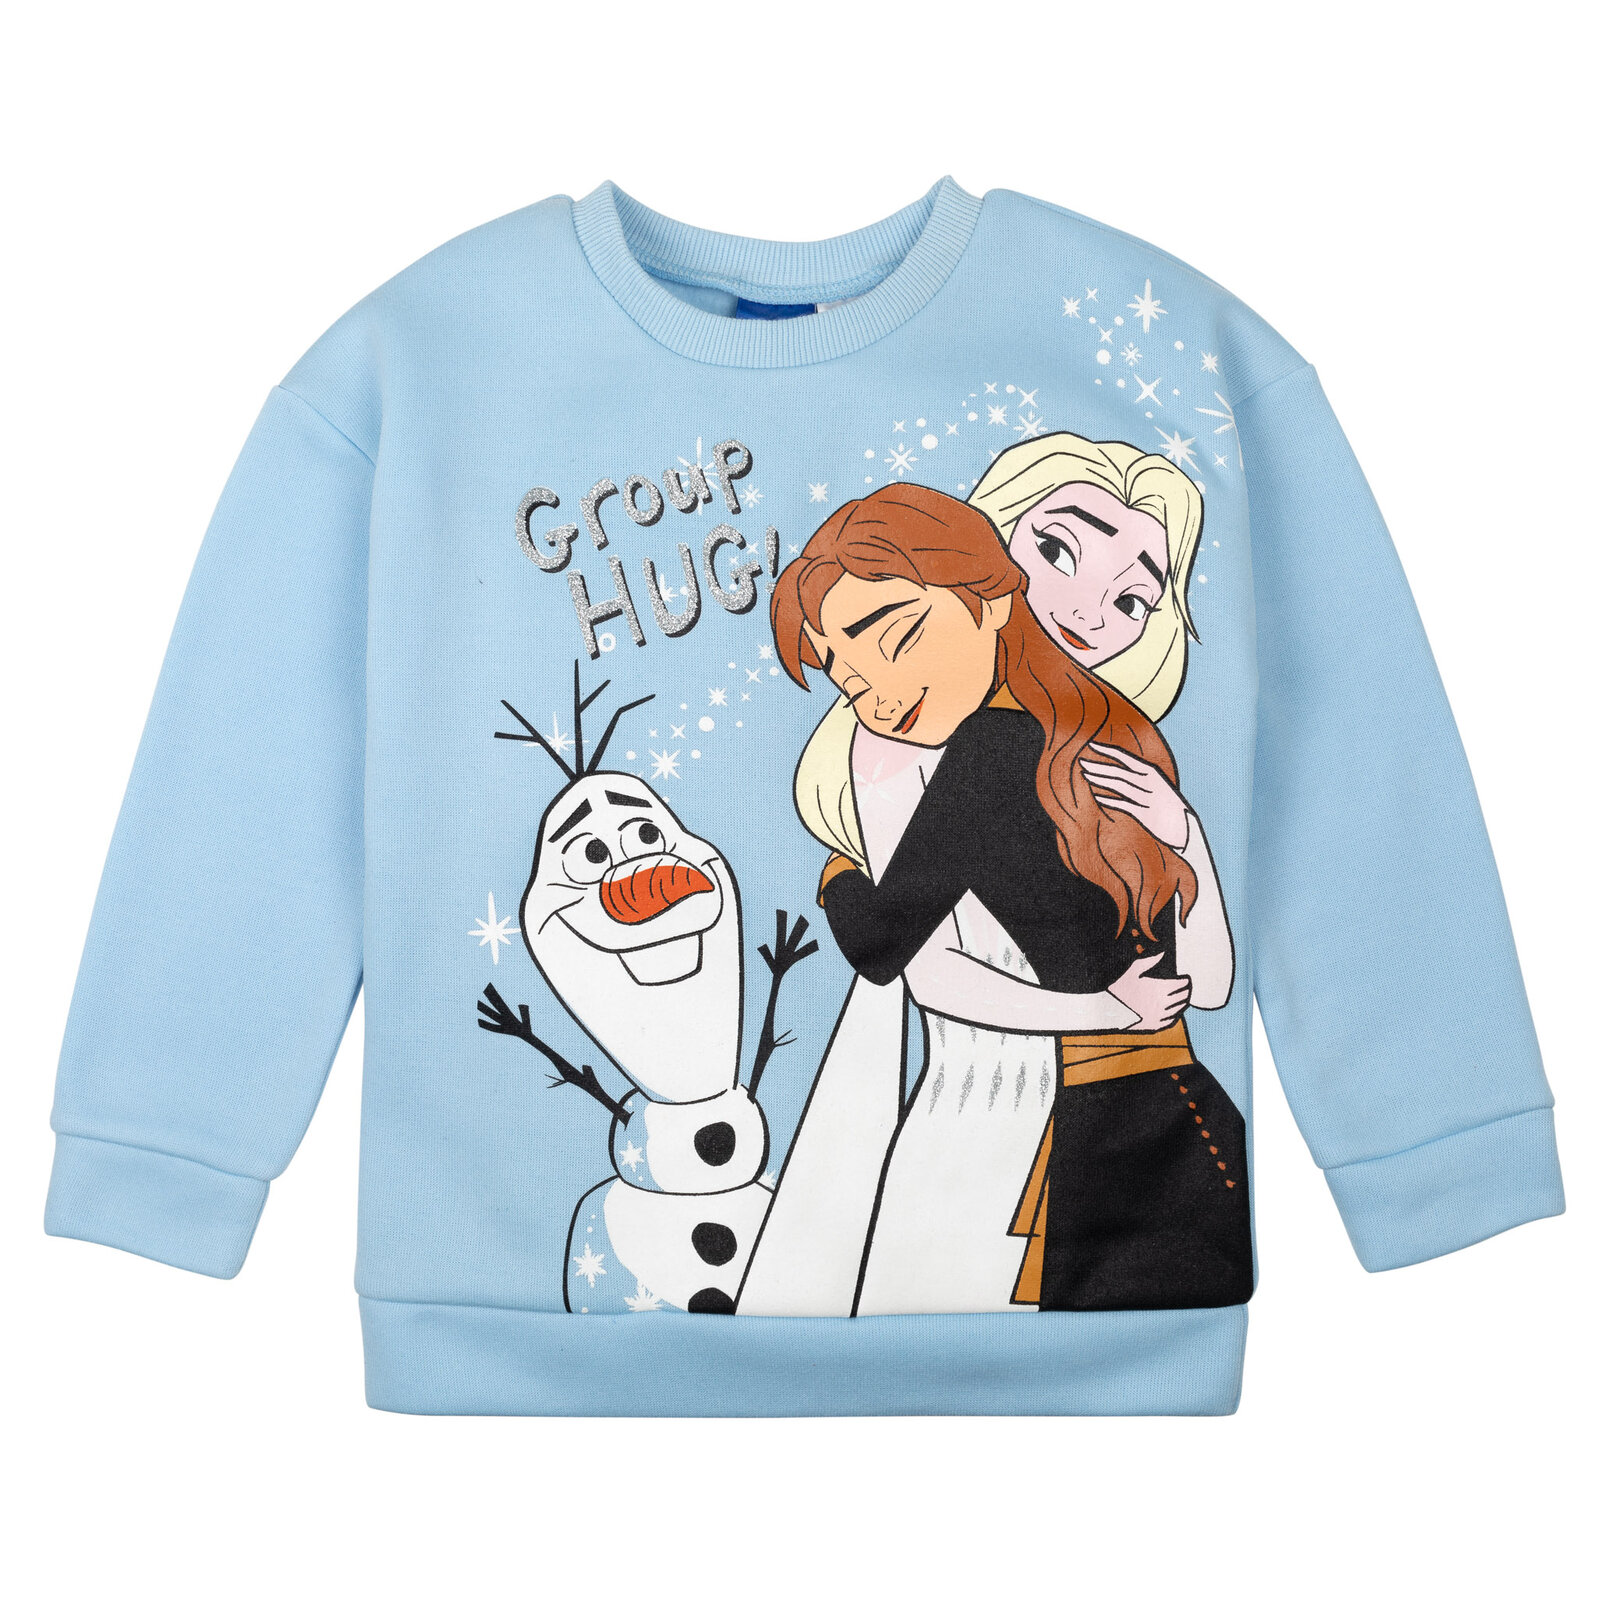 Disney Frozen Elsa Princess Anna Olaf Toddler Girls Pullover Fleece Sweatshirt and Leggings Outfit Set Toddler to Little Kid - image 4 of 5